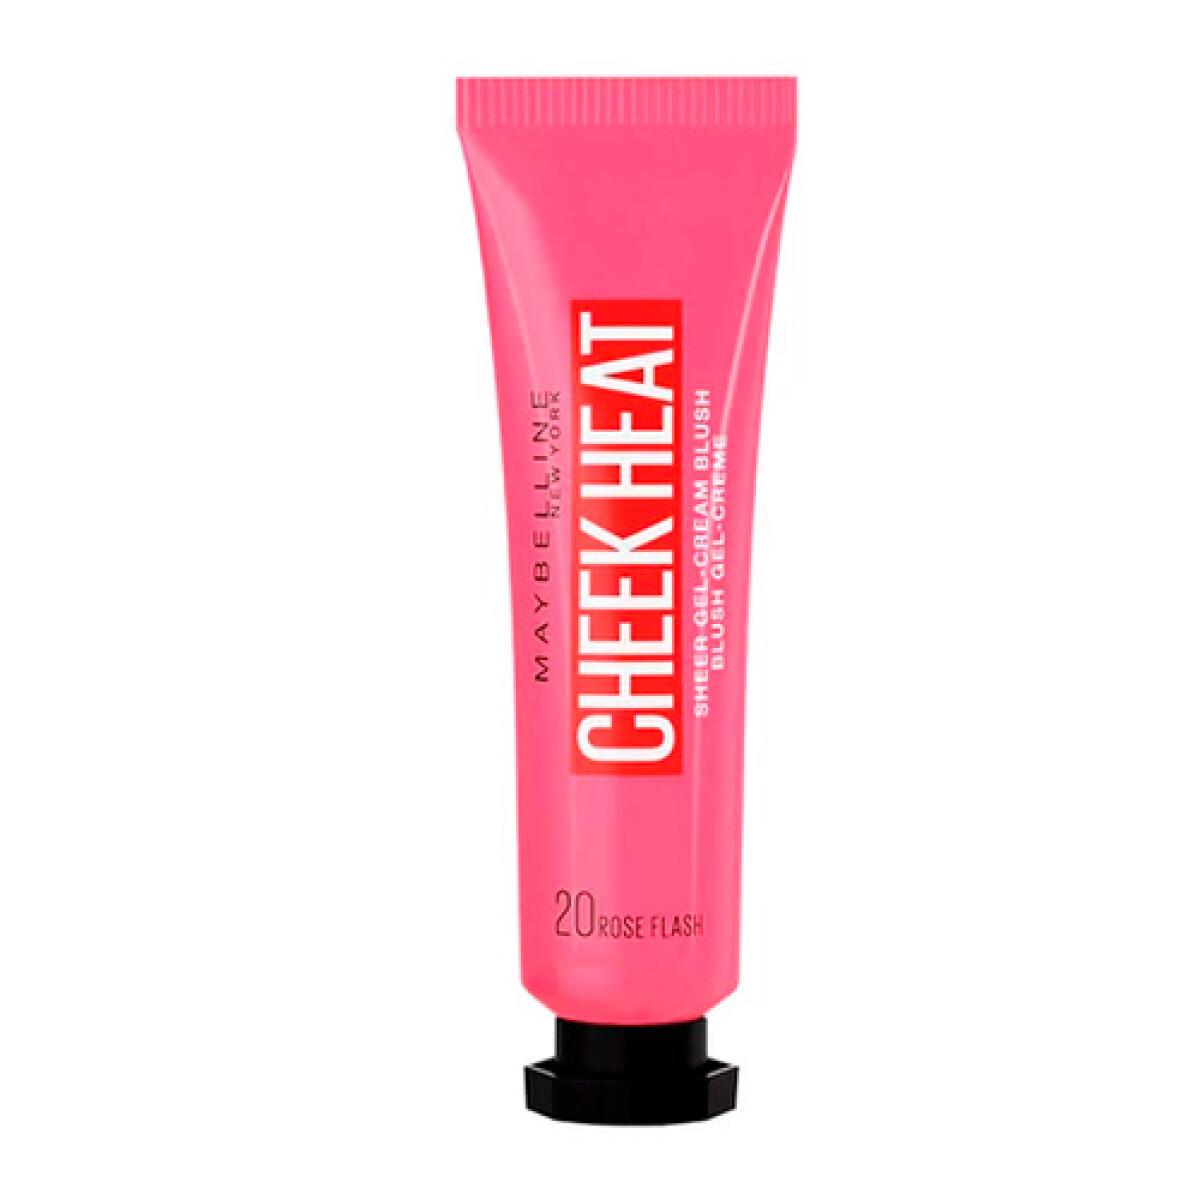 Rubor en Crema Maybelline Cheek Heat - 20 Rose Flash - 001 